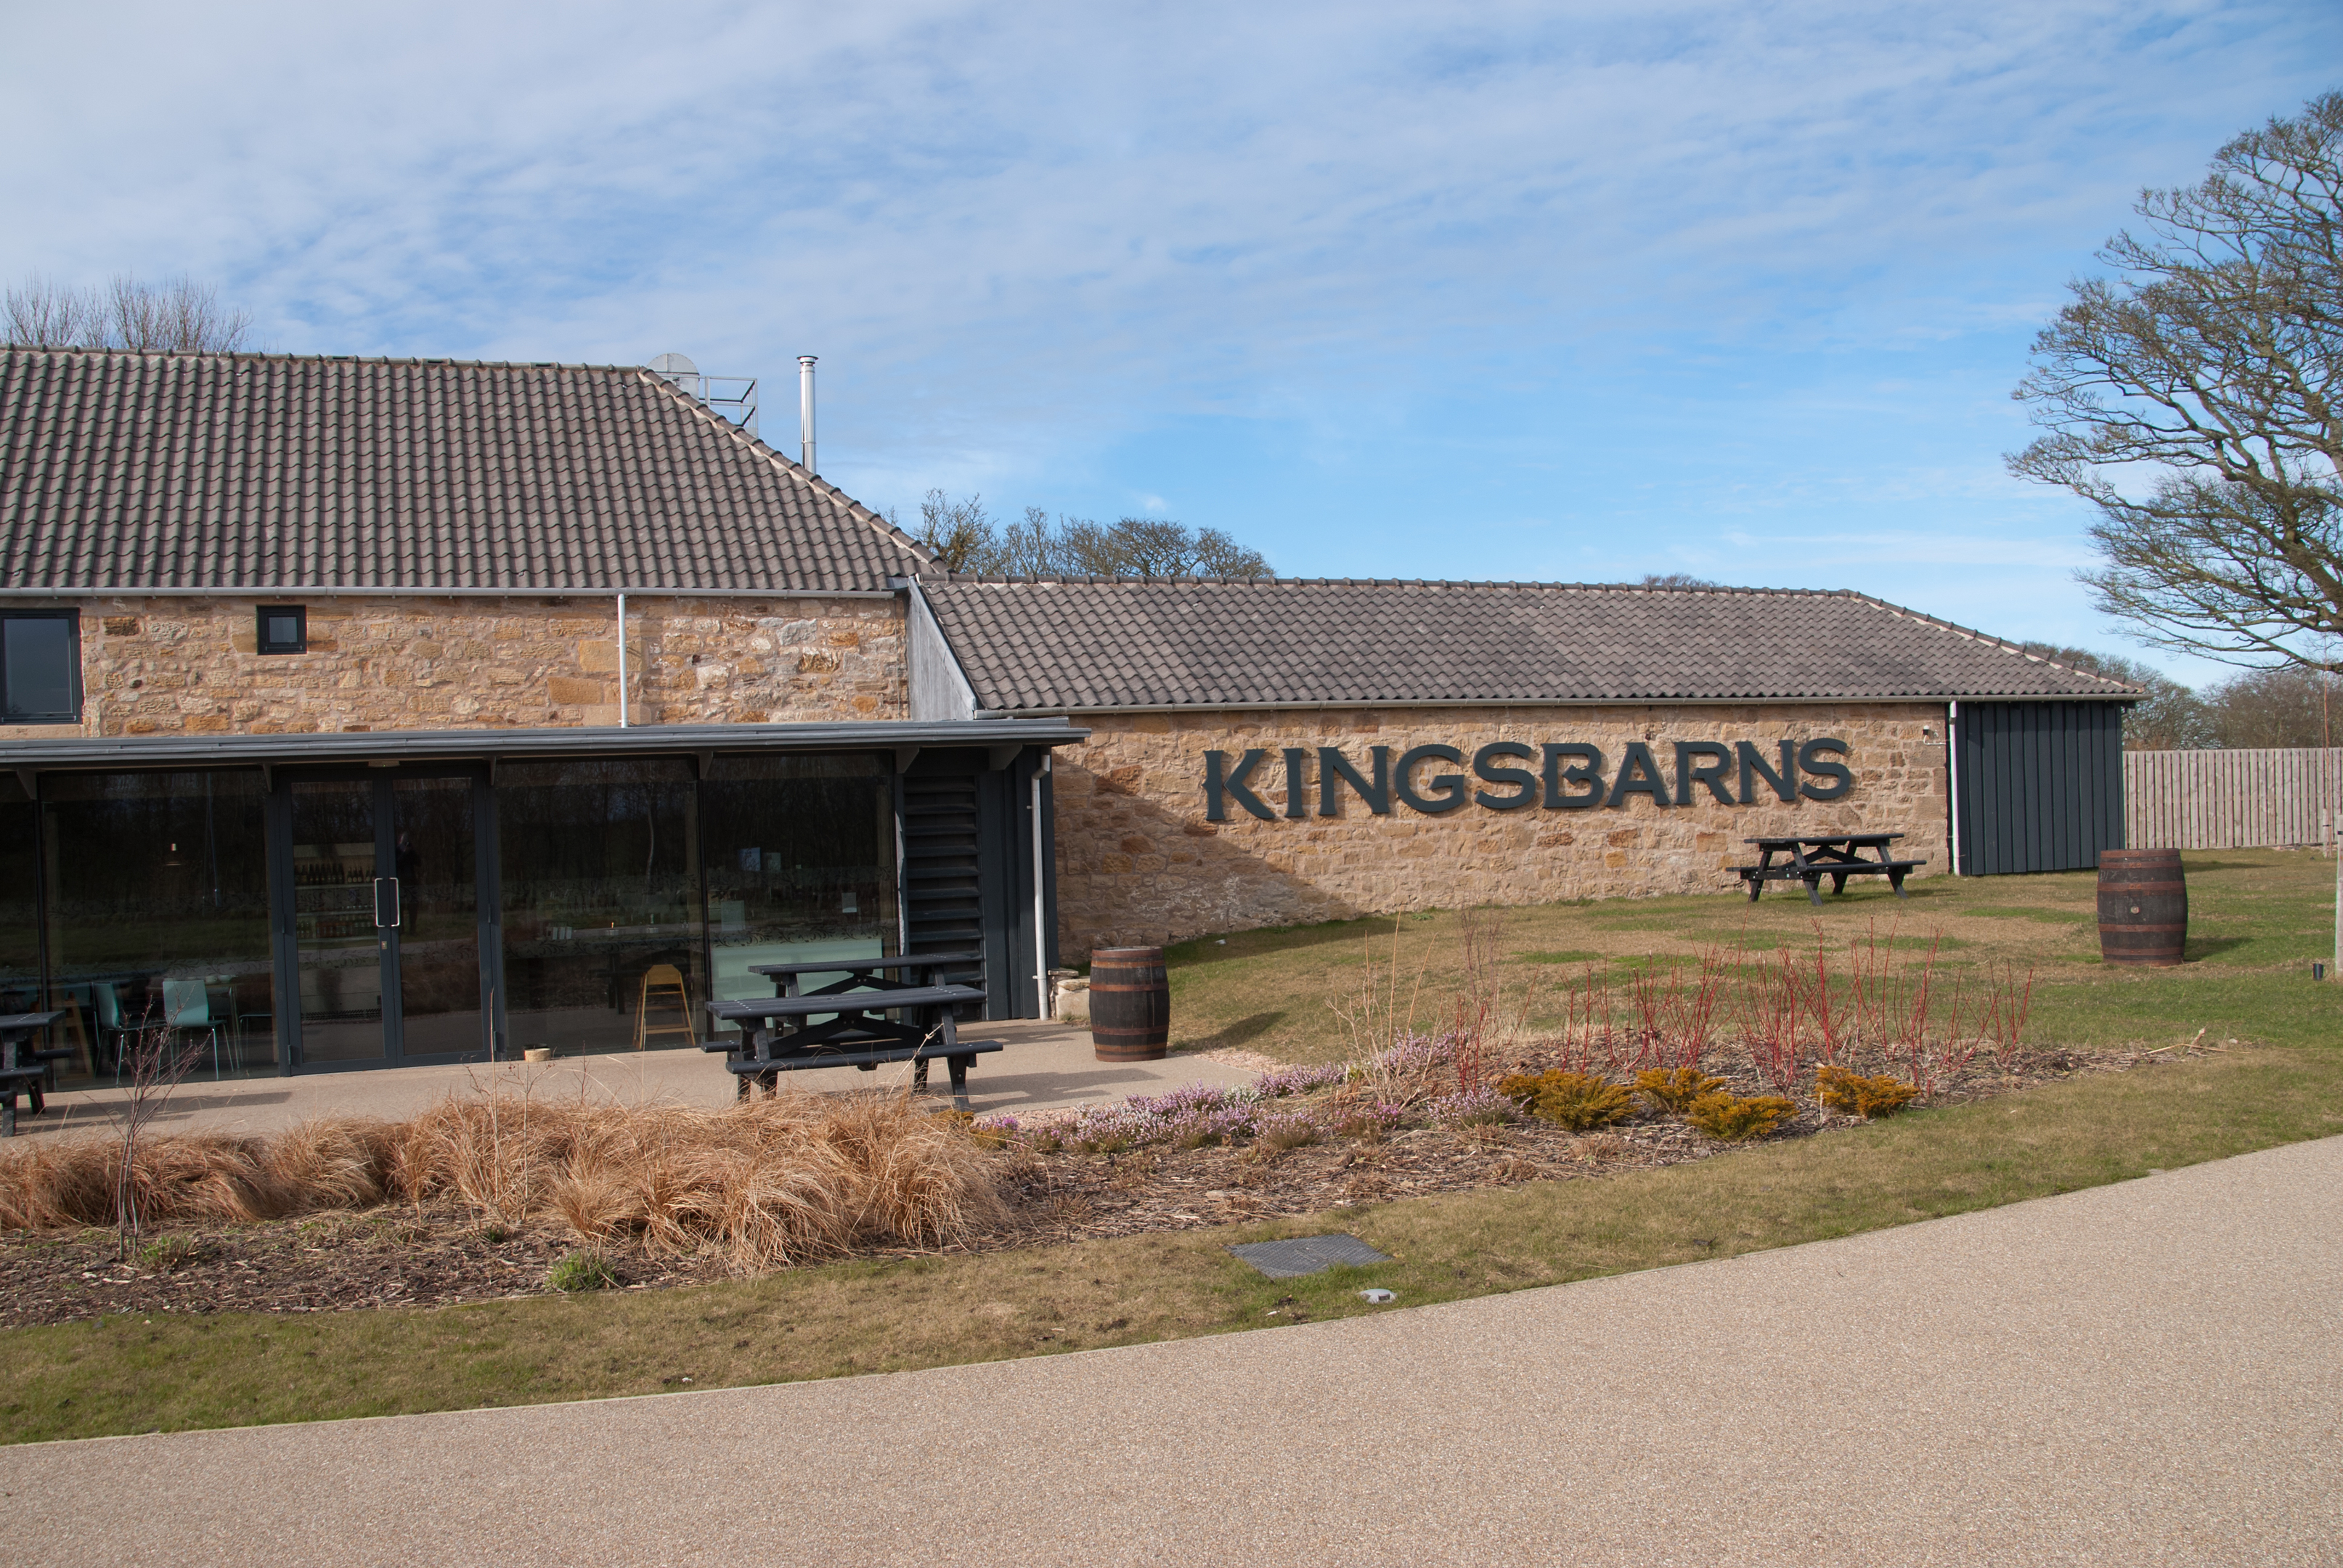 Kingsbarns Distillery - well worth a tour